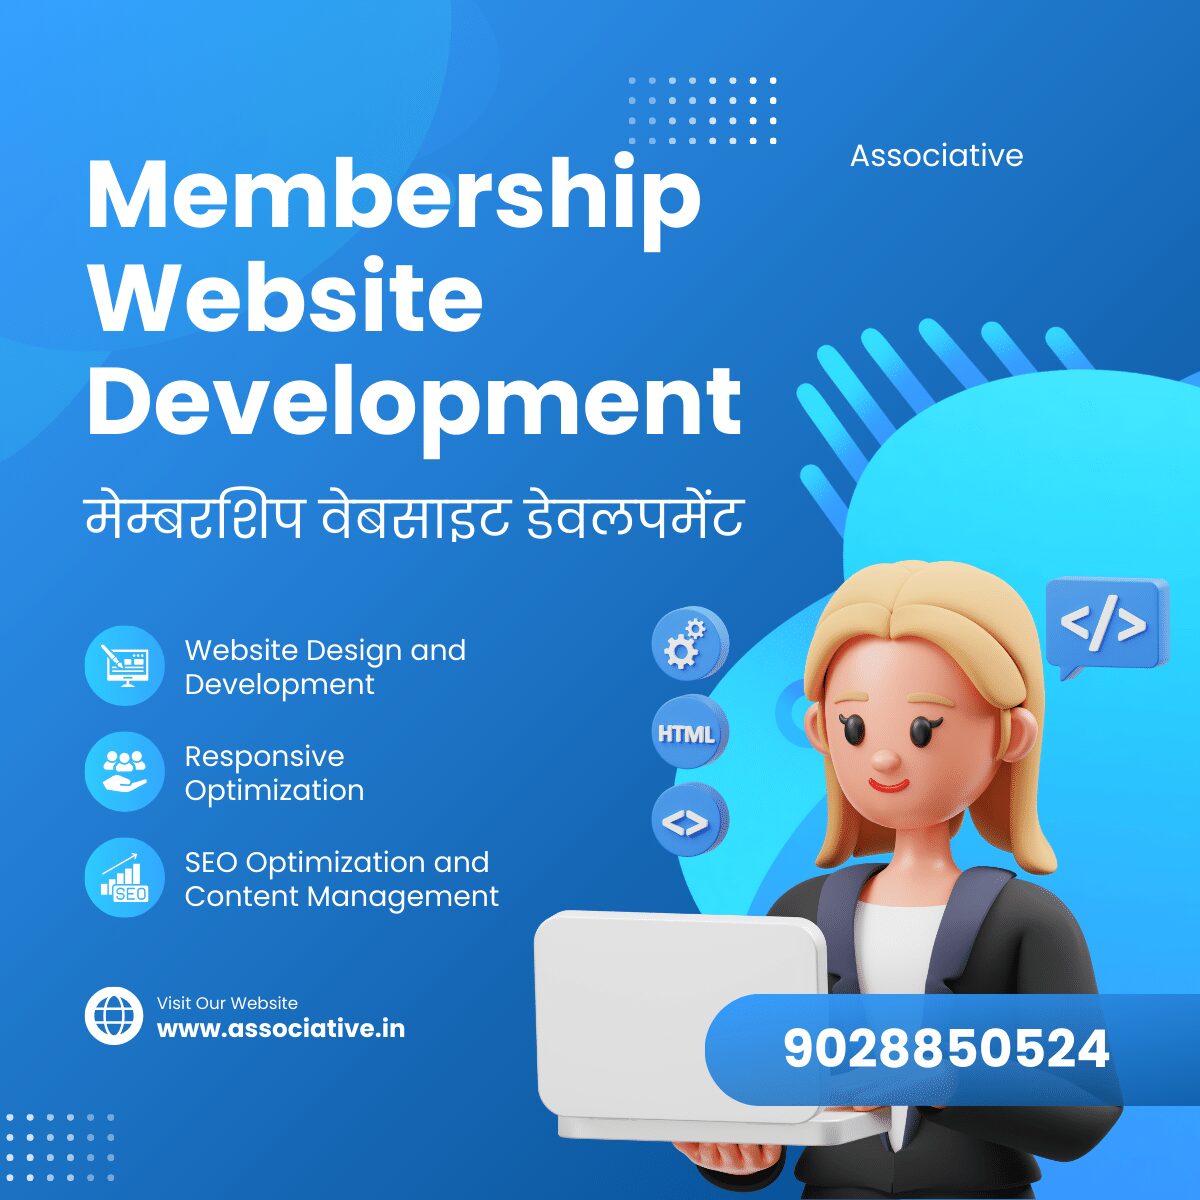 Membership Website Development मेम्बरशिप वेबसाइट डेवलपमेंट